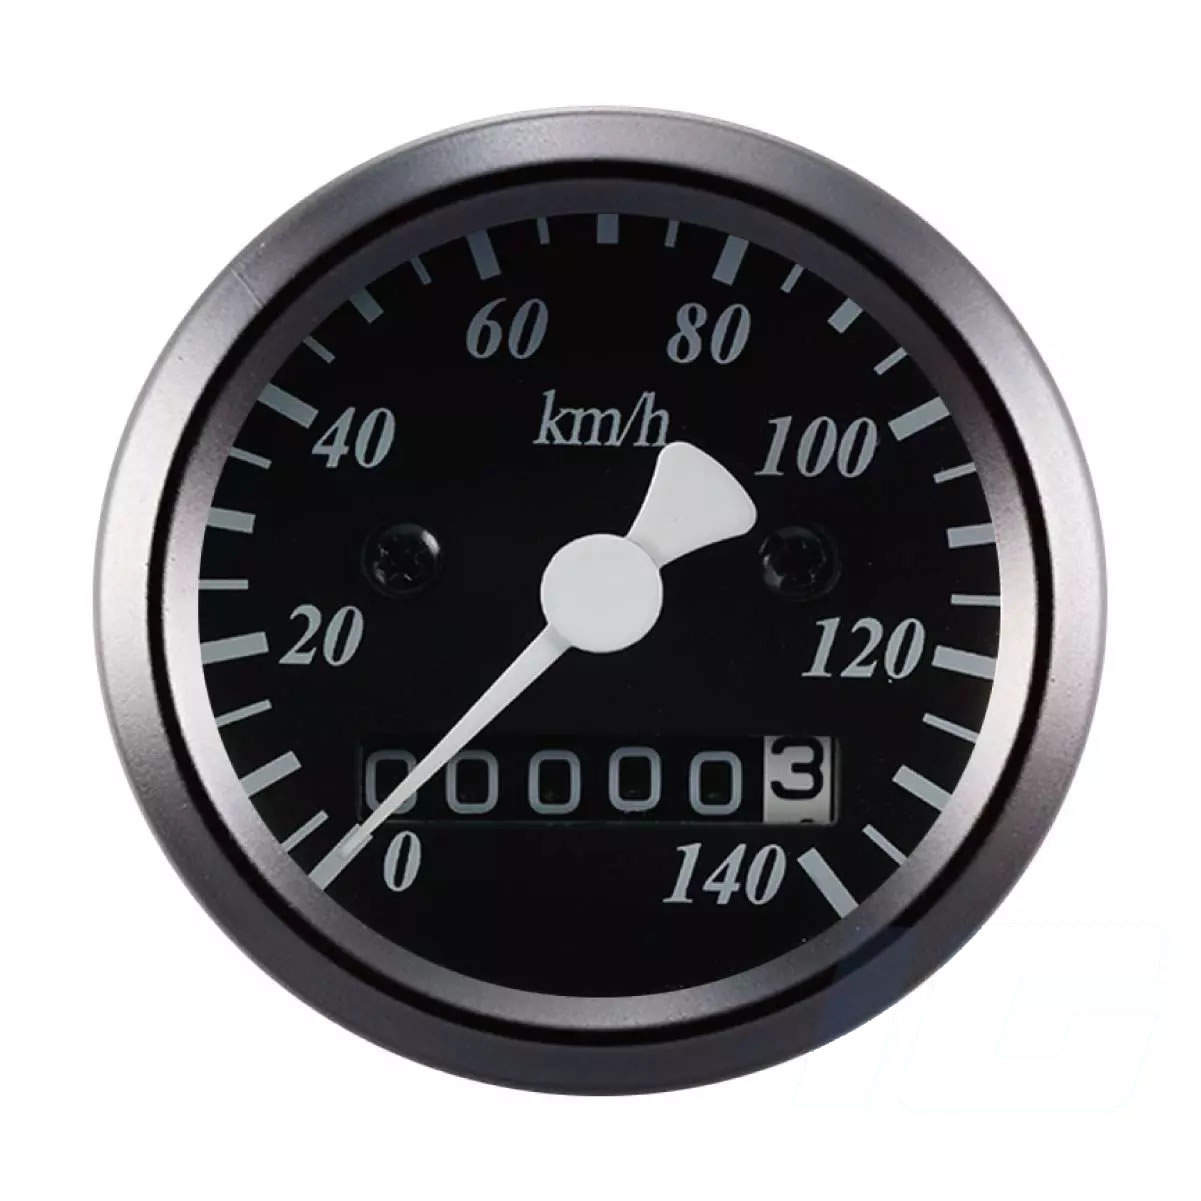 48mm Black Face Universal Aftermarket Gauge – Mechanical Speedometer for Motorcycle